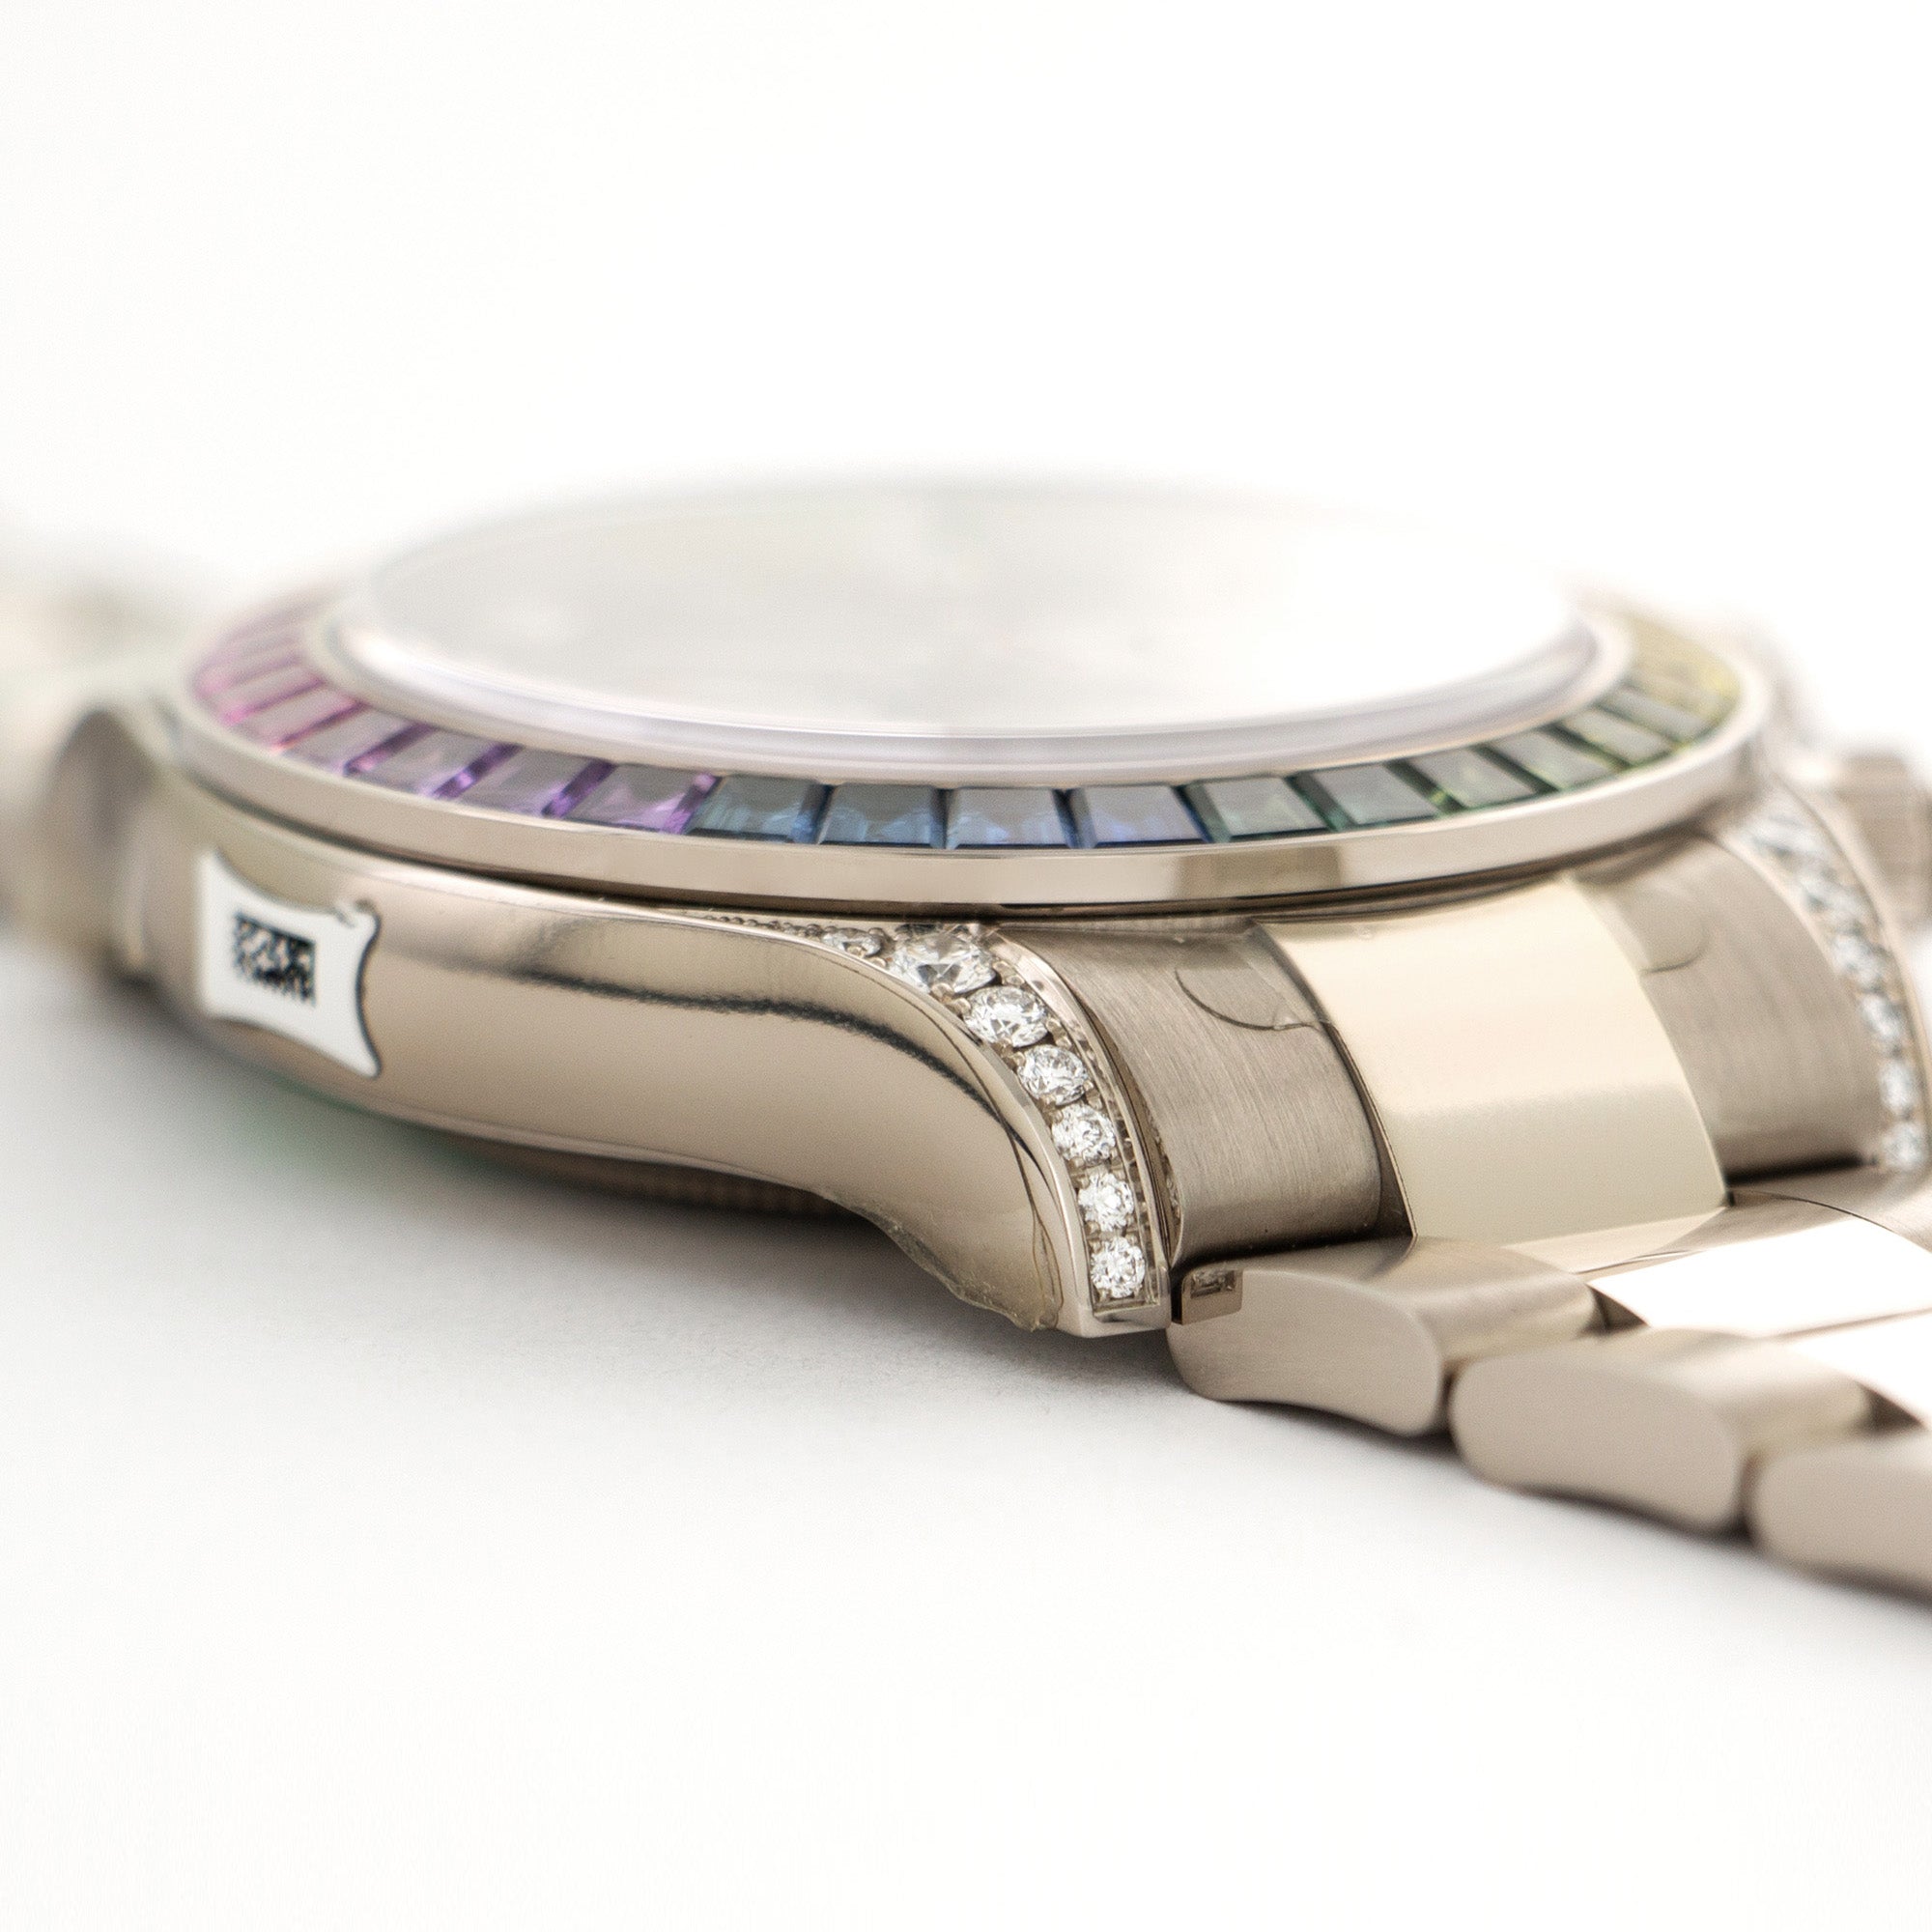 Rolex - Rolex White Gold Cosmograph Daytona Rainbow Watch Ref. 116599 - The Keystone Watches